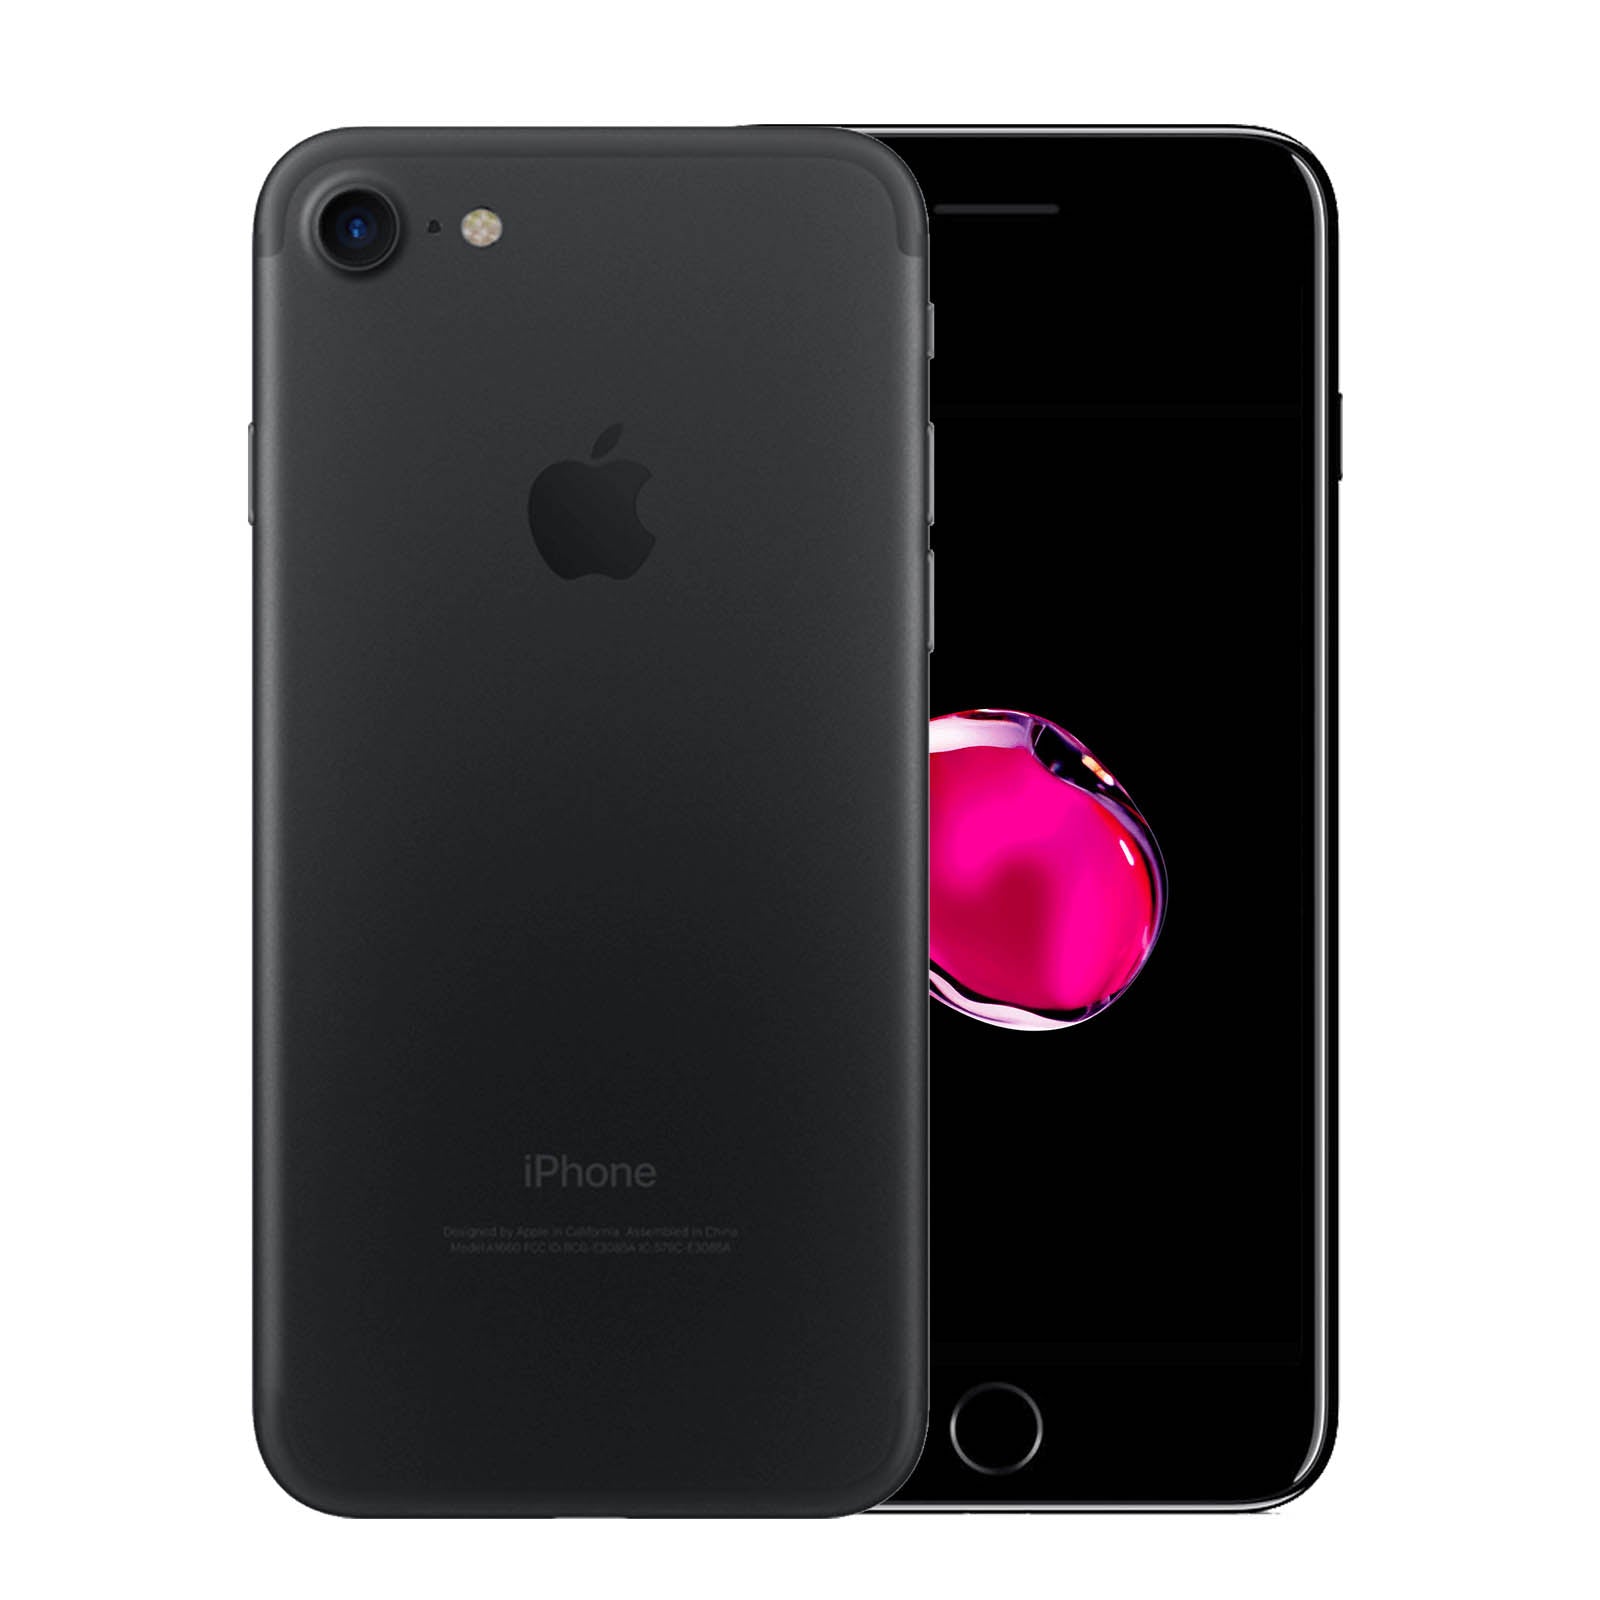 Apple iPhone 7 256GB Black Very Good- Unlocked